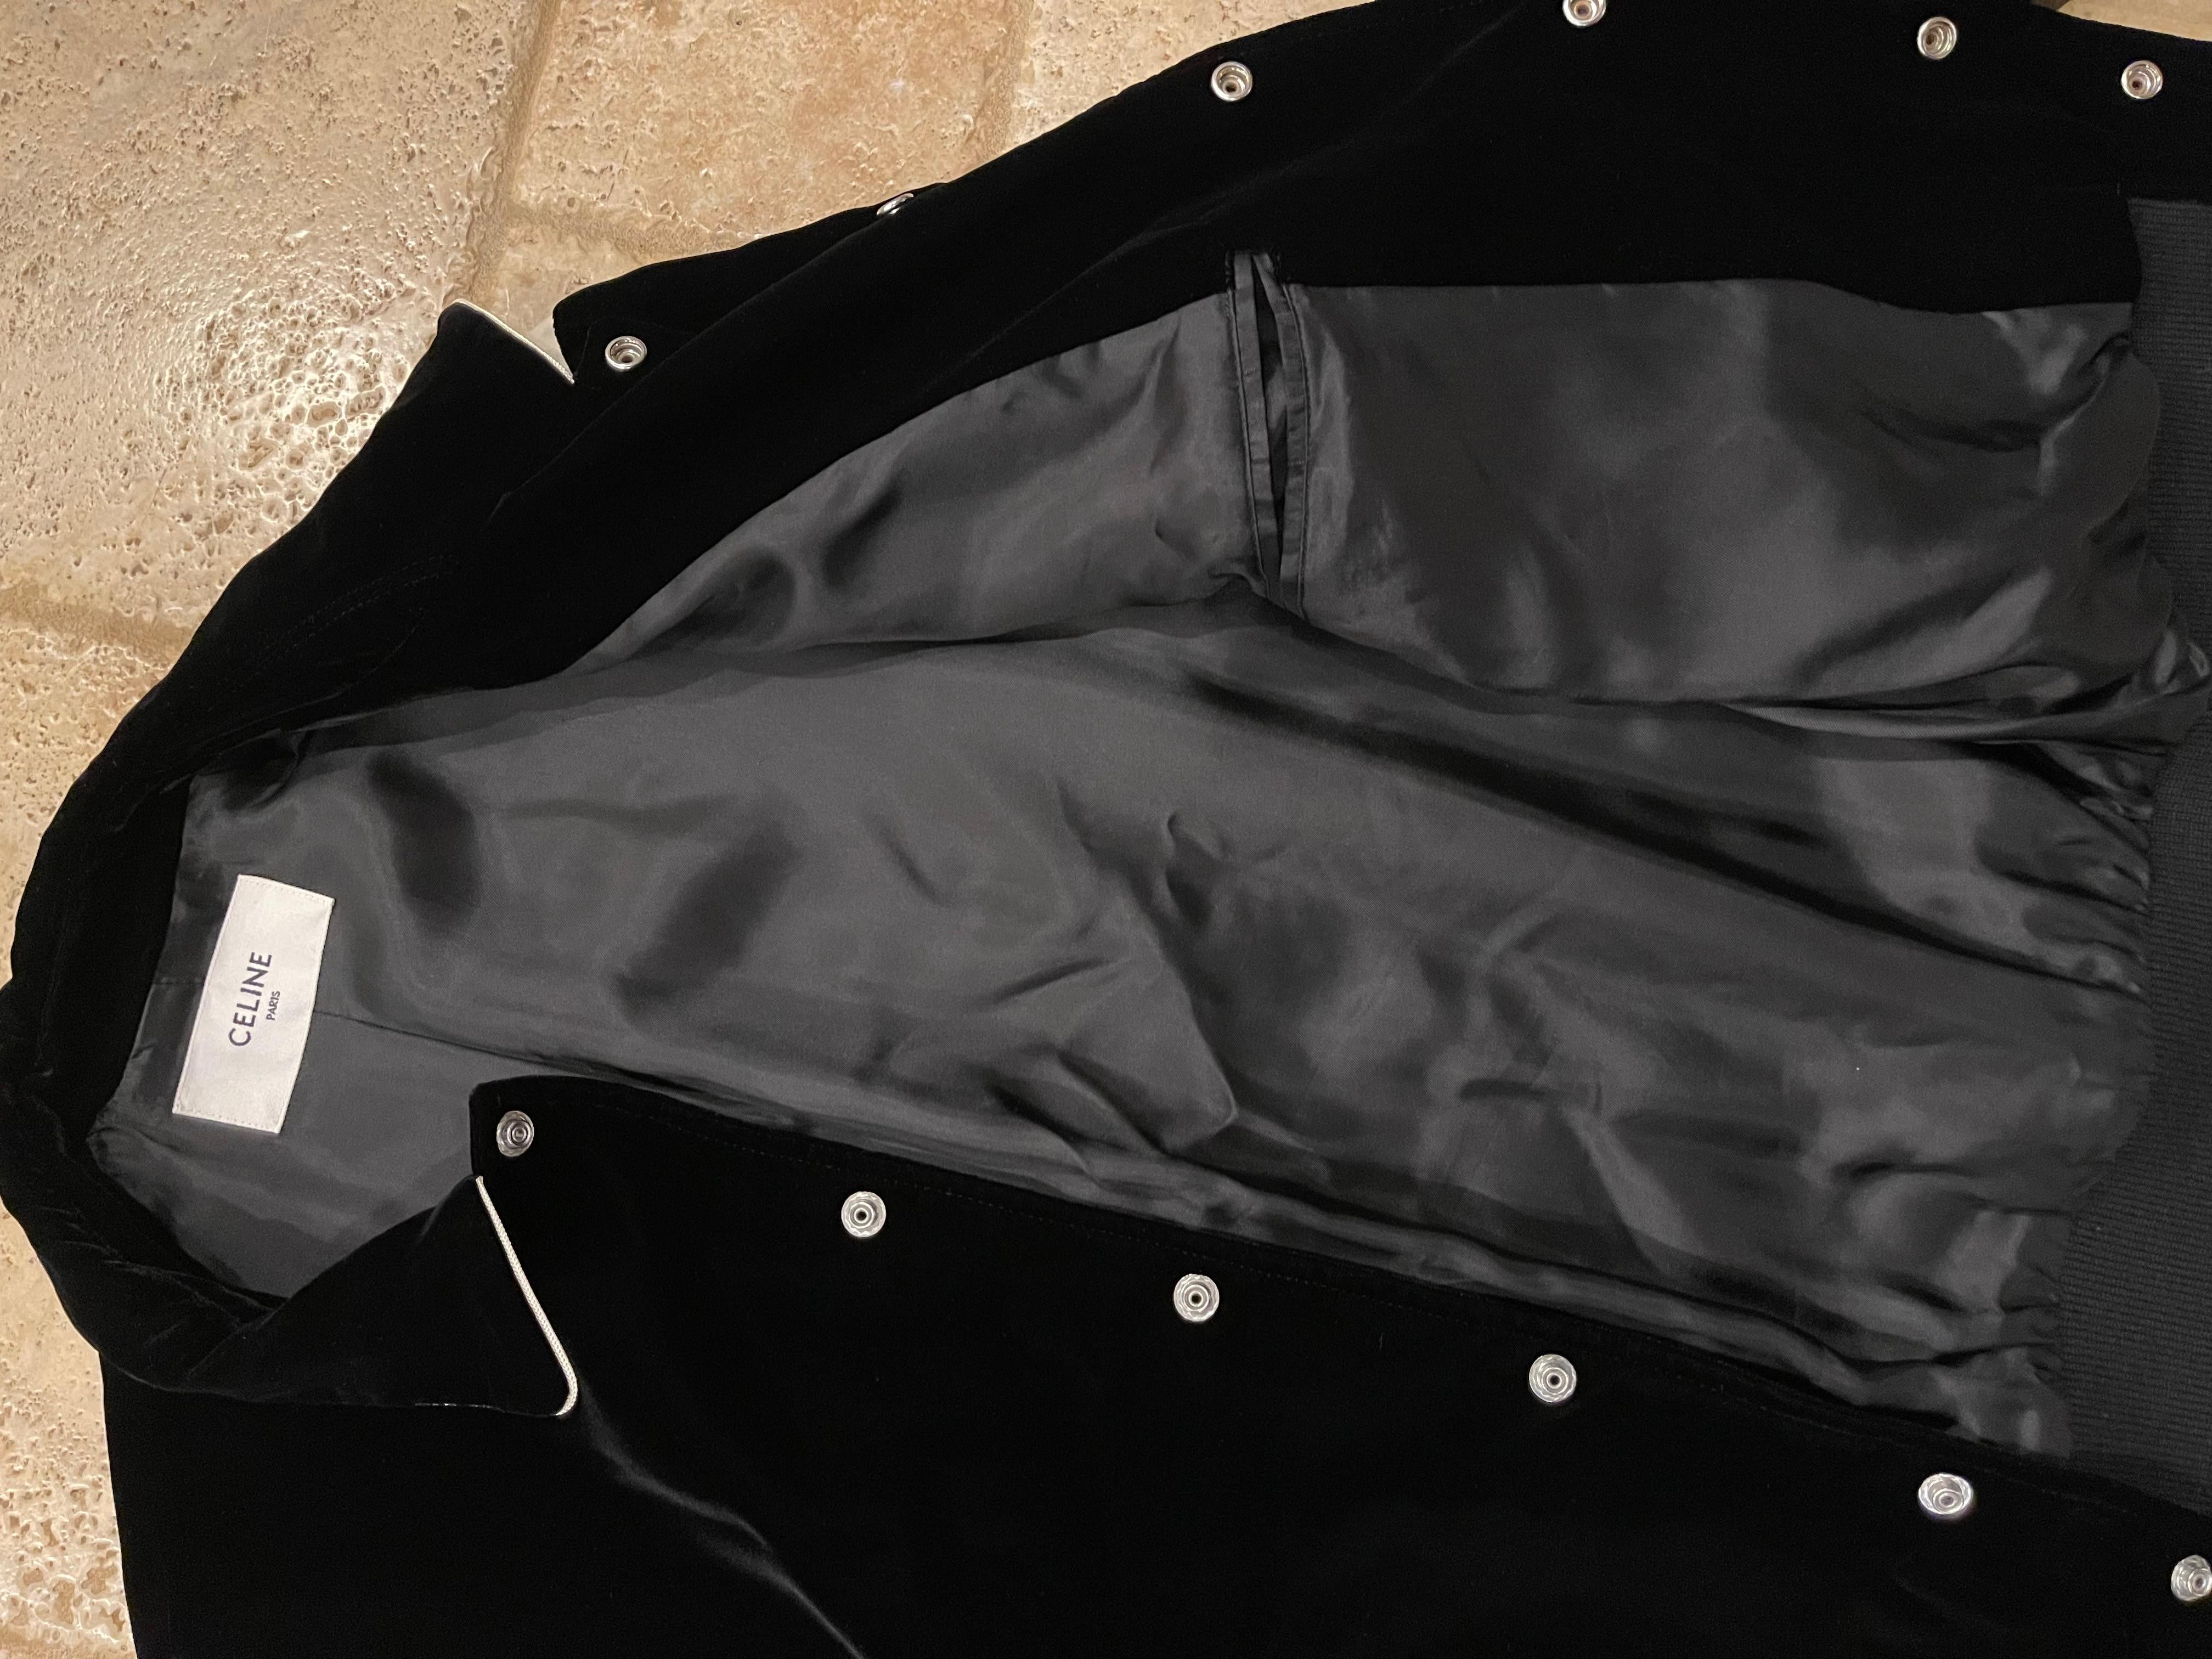 Celine Hedi Slimane Black Velvet Teddy Varsity Jacket RARE size 48 For Sale 8